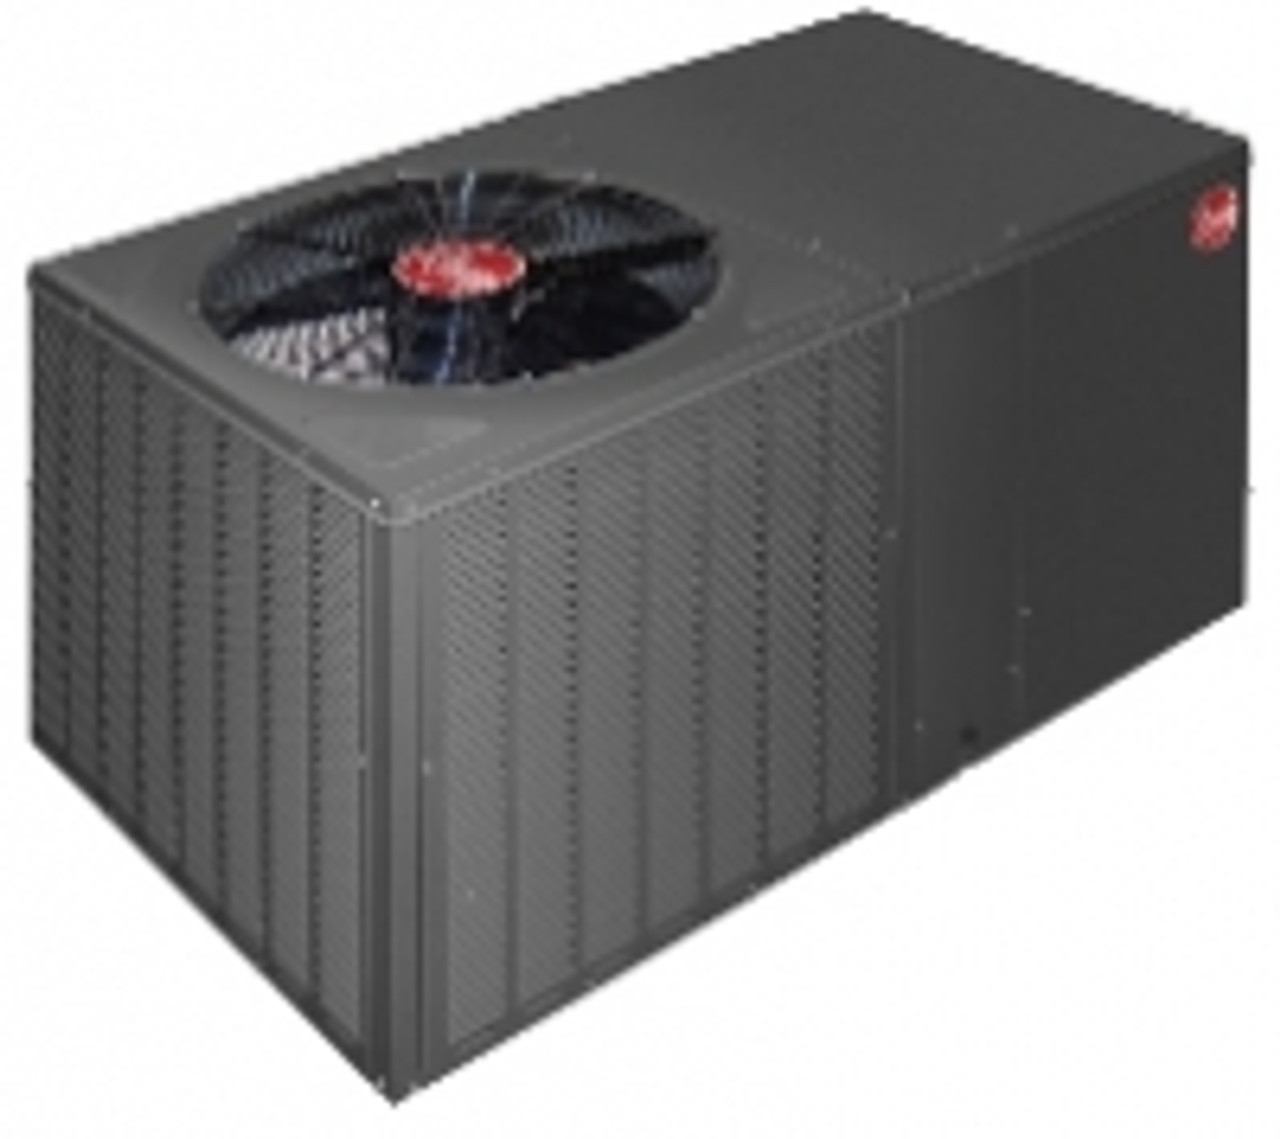 Buy Rheem Air Conditioning Units Online Rheem 3 4 5 Ton Ac Unit | Free ...